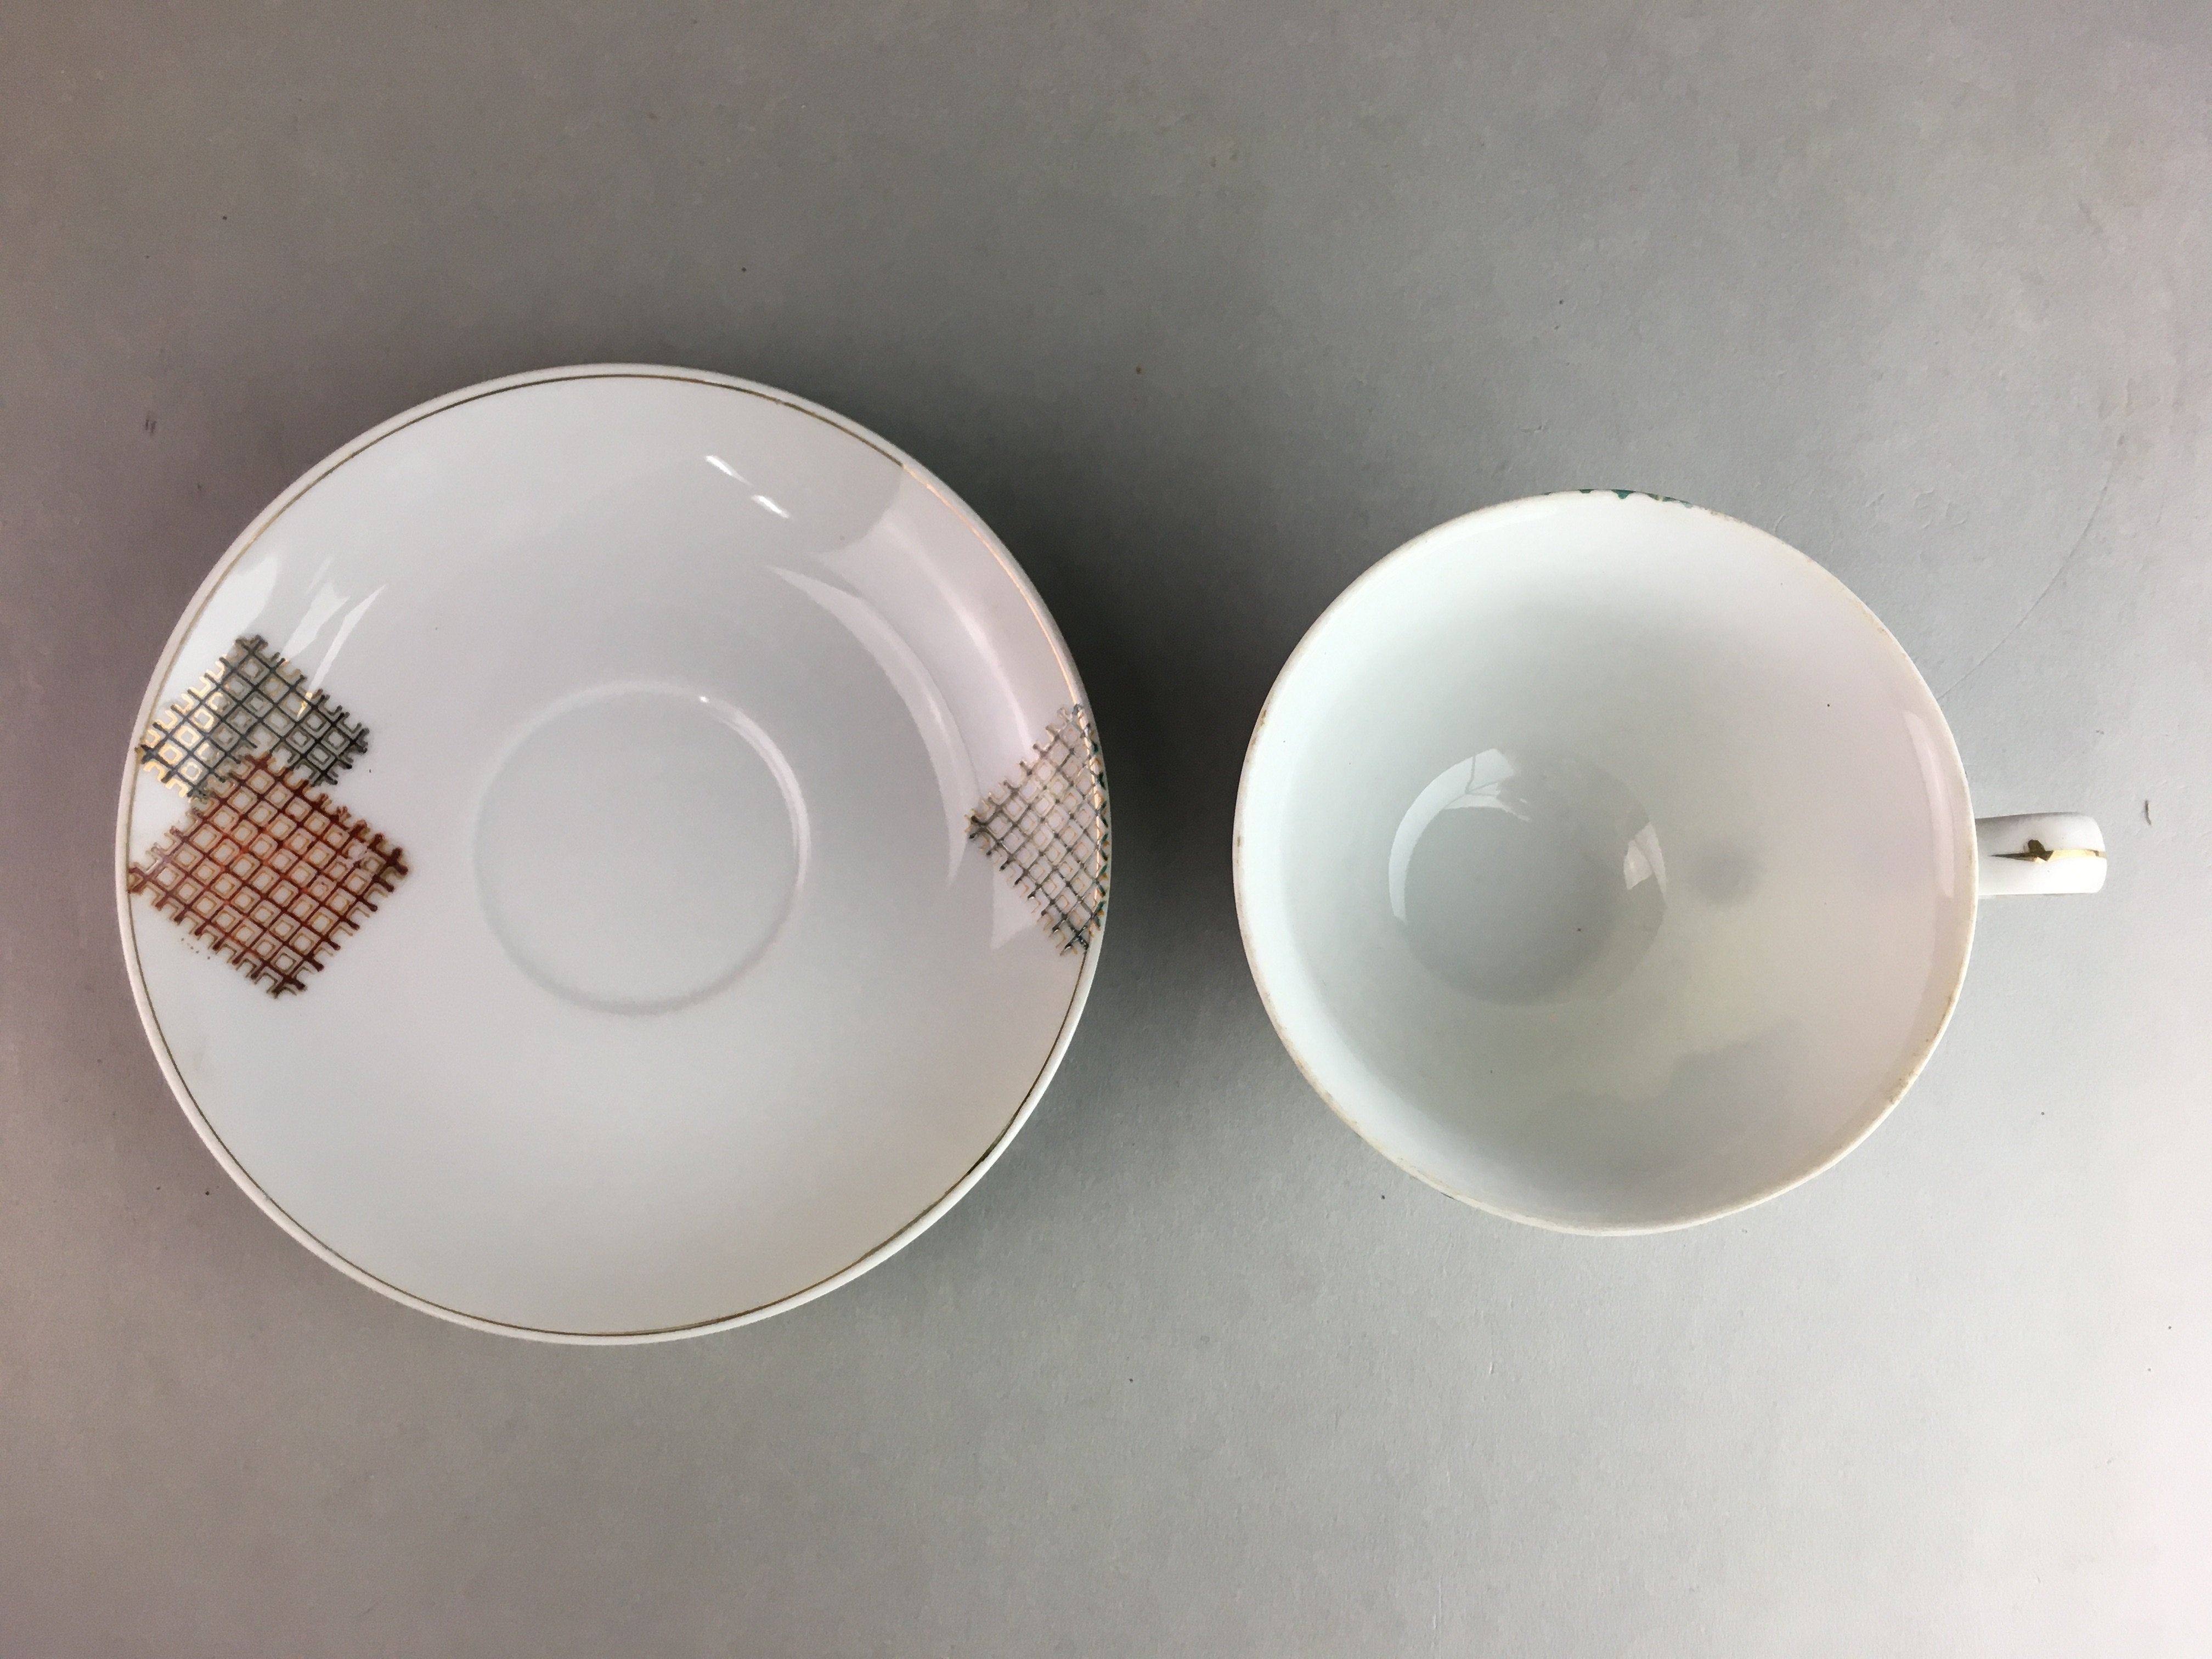 Japanese Porcelain Teacup Mug Saucer Vtg Yunomi Plate Set Plaid PP313